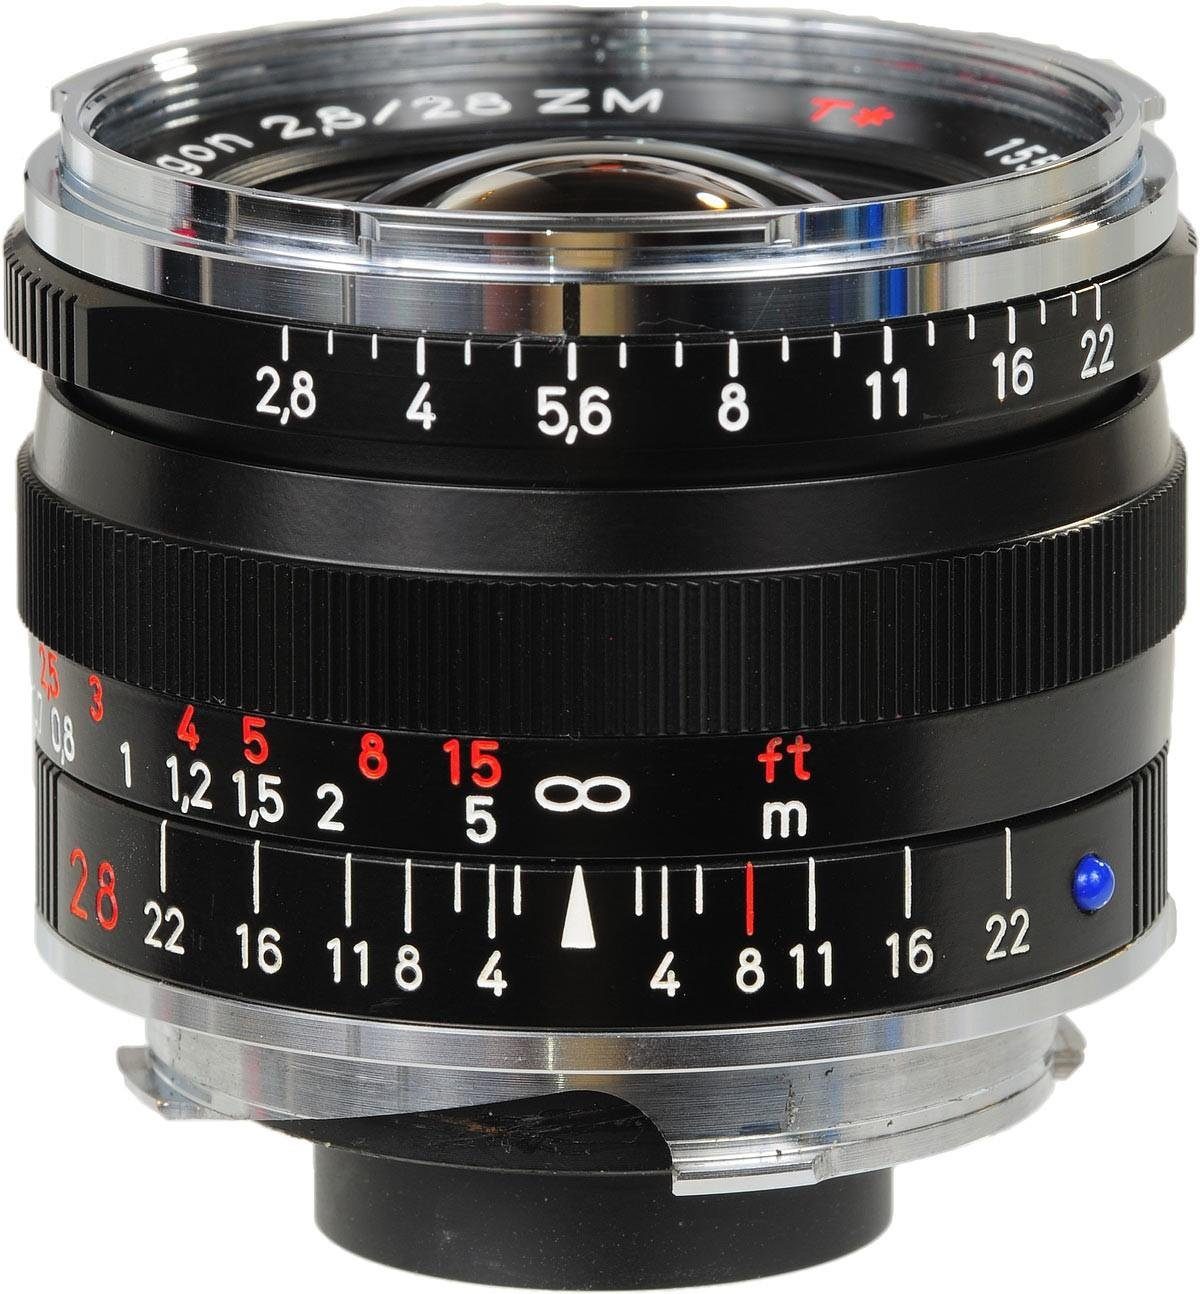 M-Mount 28mm Objektiv schwarz Leica ZEISS Biogon f2,8